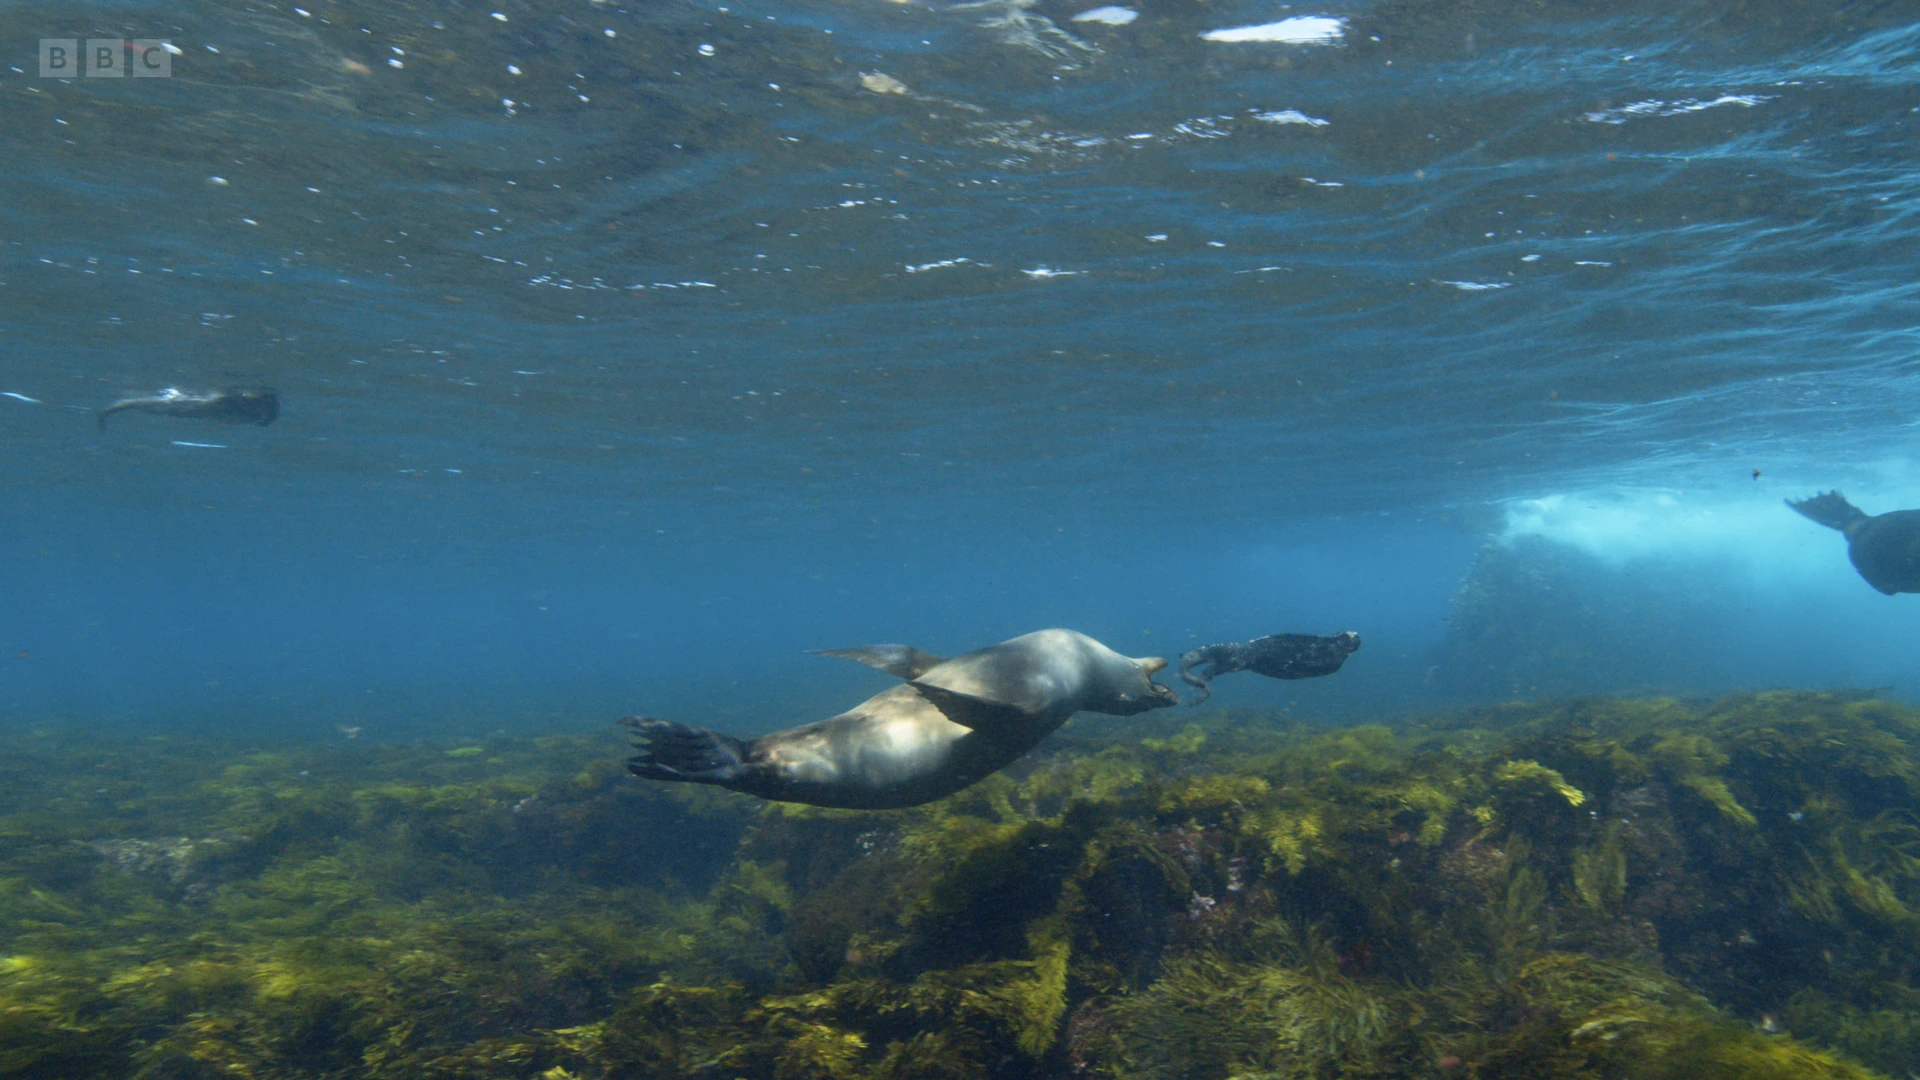 Galápagos sea lion (Zalophus wollebaeki) as shown in A Perfect Planet - Oceans